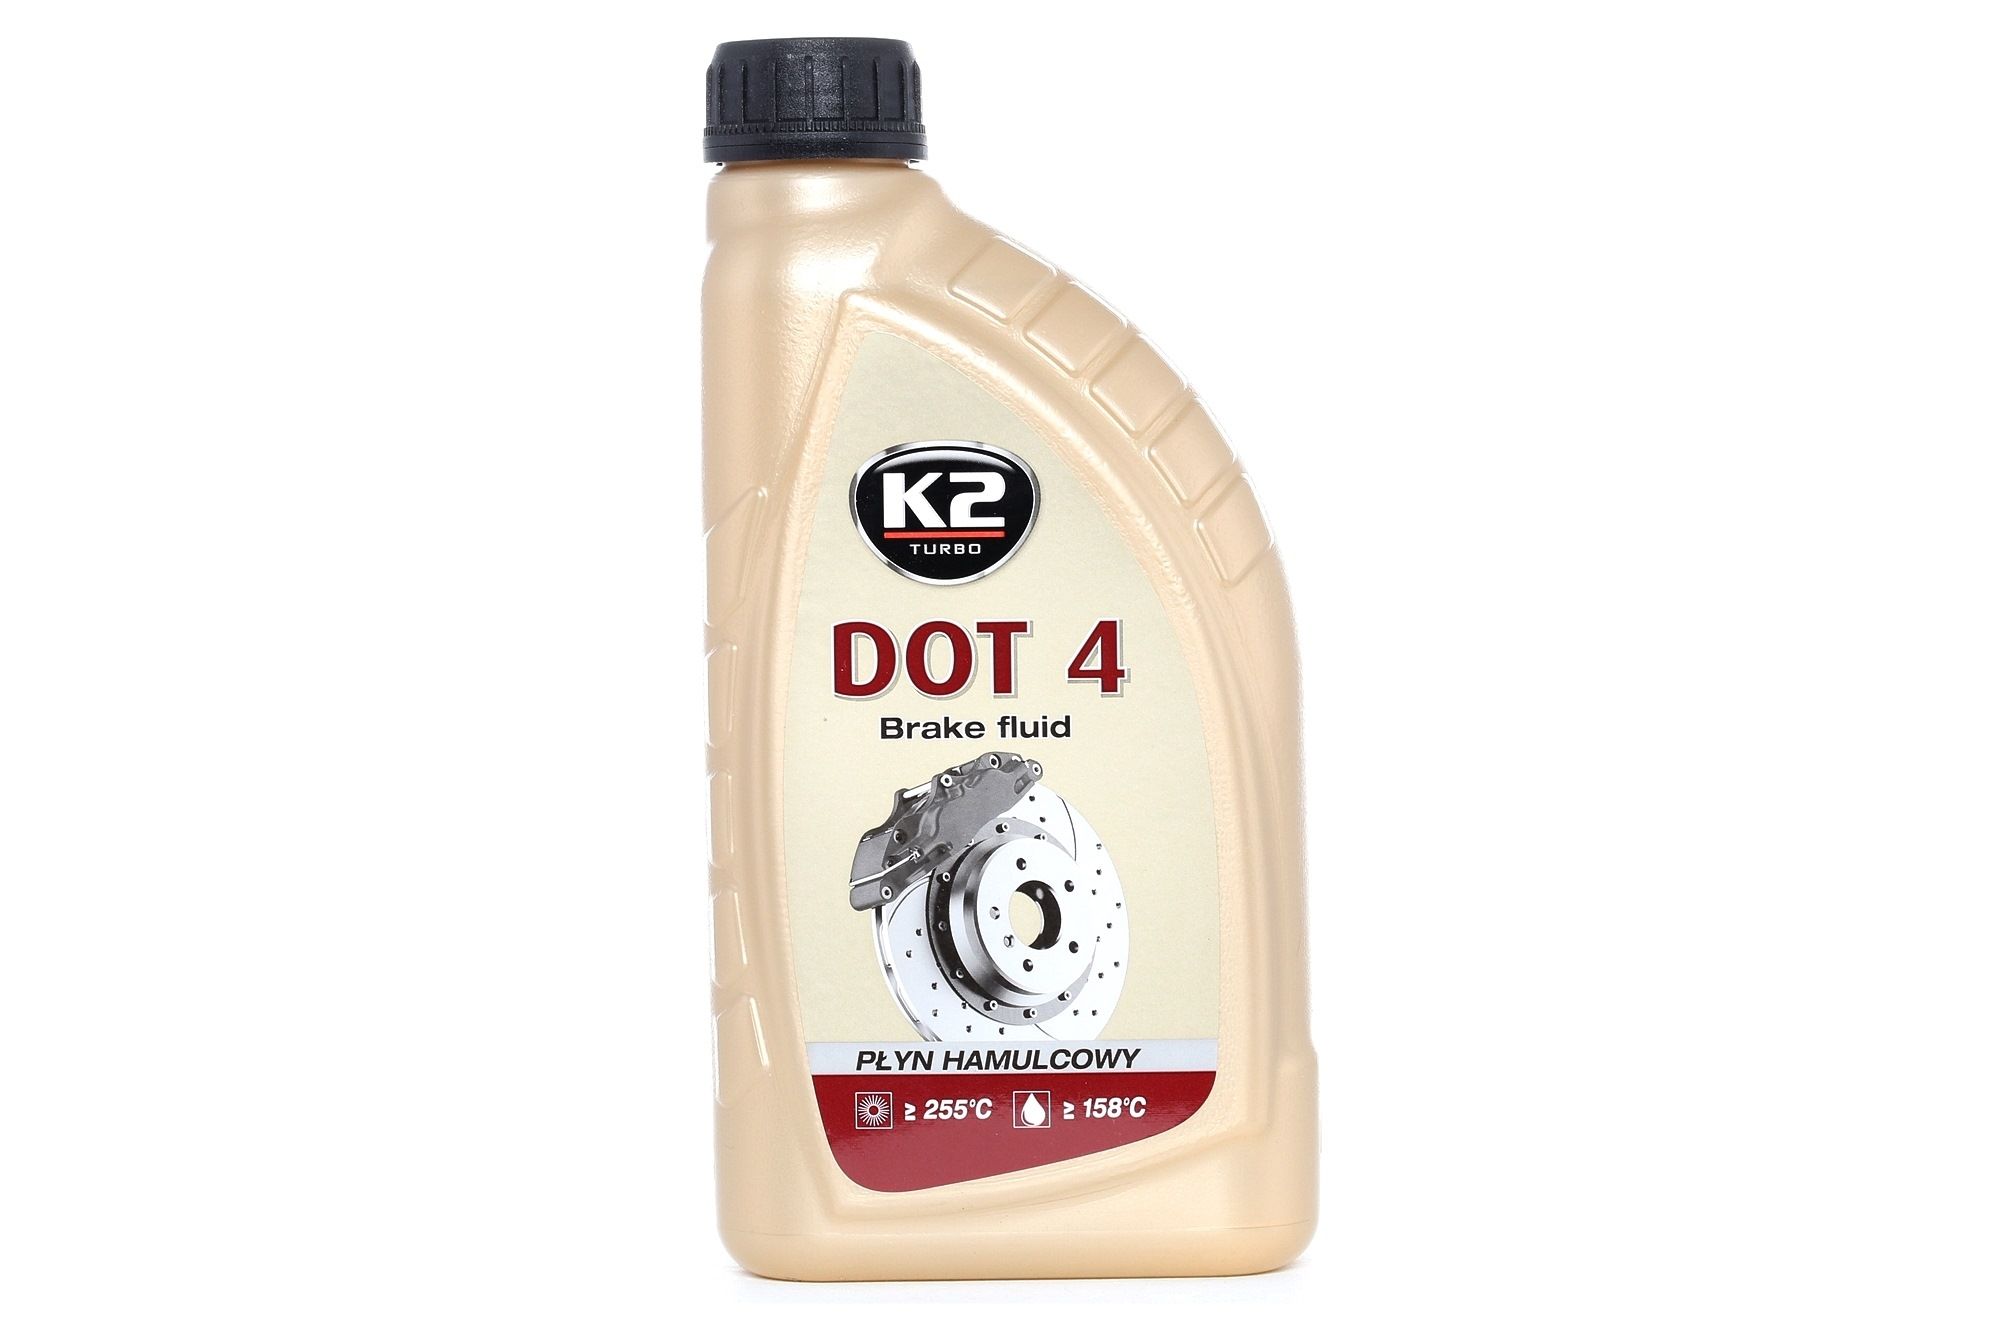 K2 T108 Lichid de frana economic în magazin online